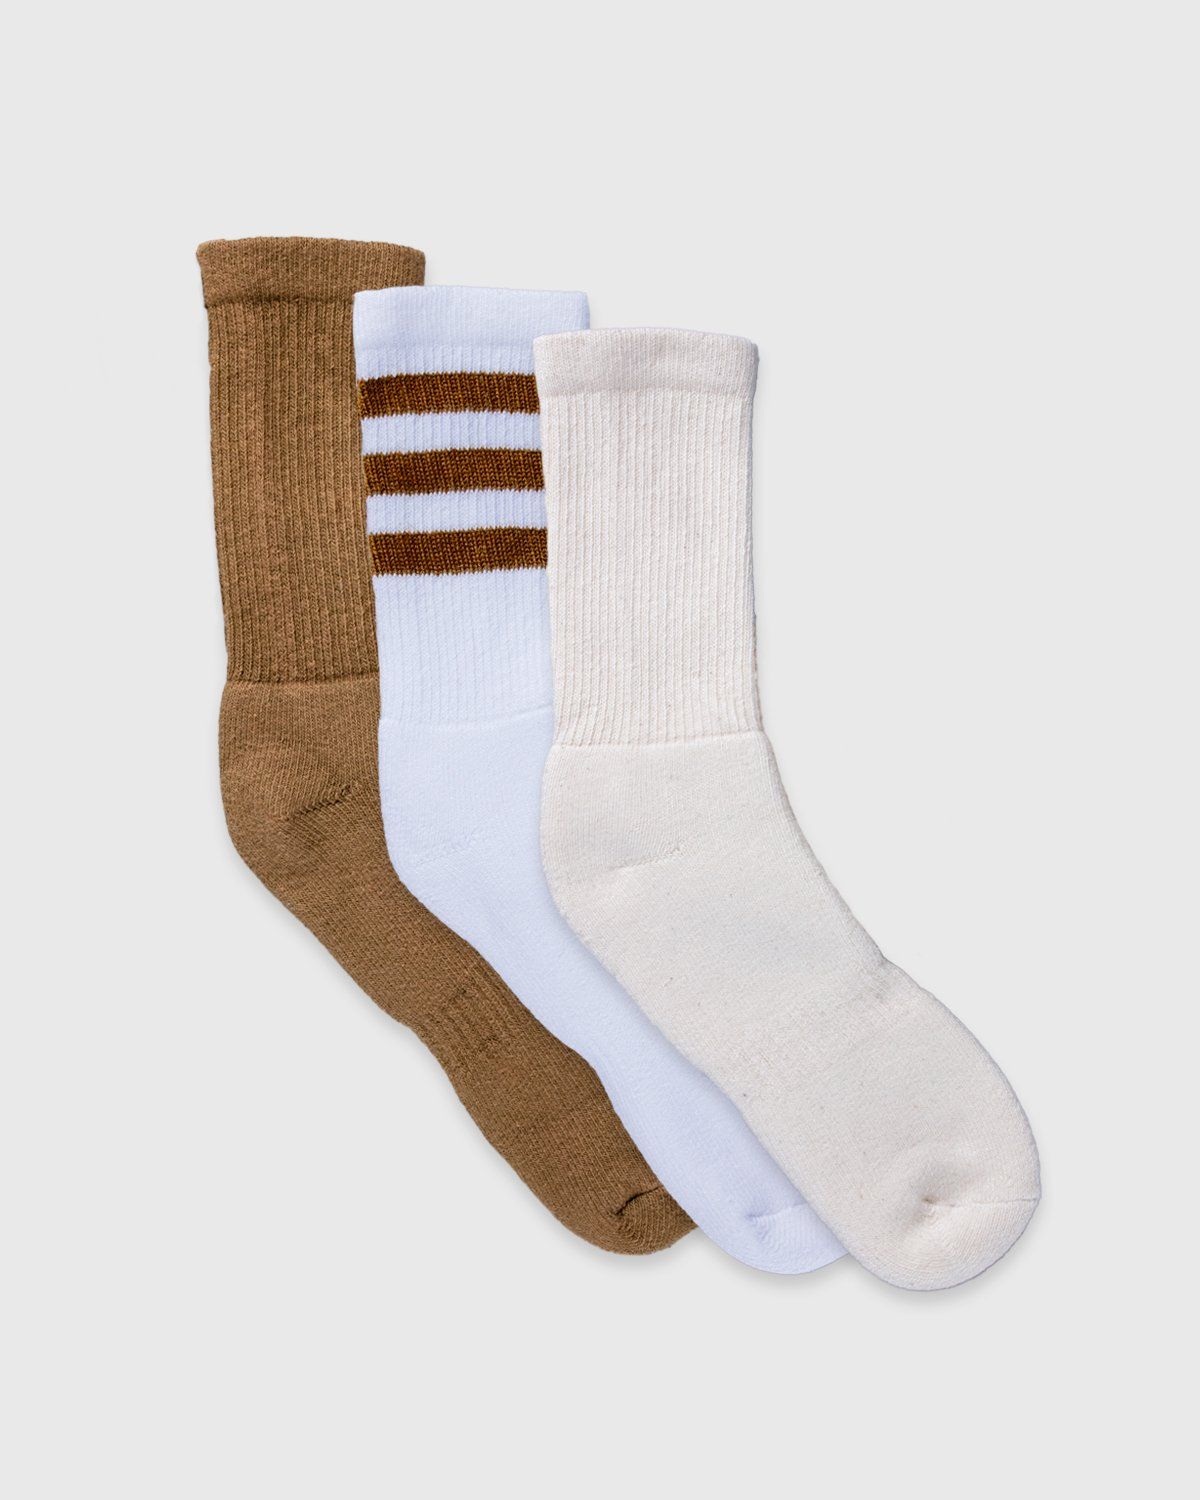 Darryl Brown – Sock Set Multicolour - Socks - Multi - Image 1